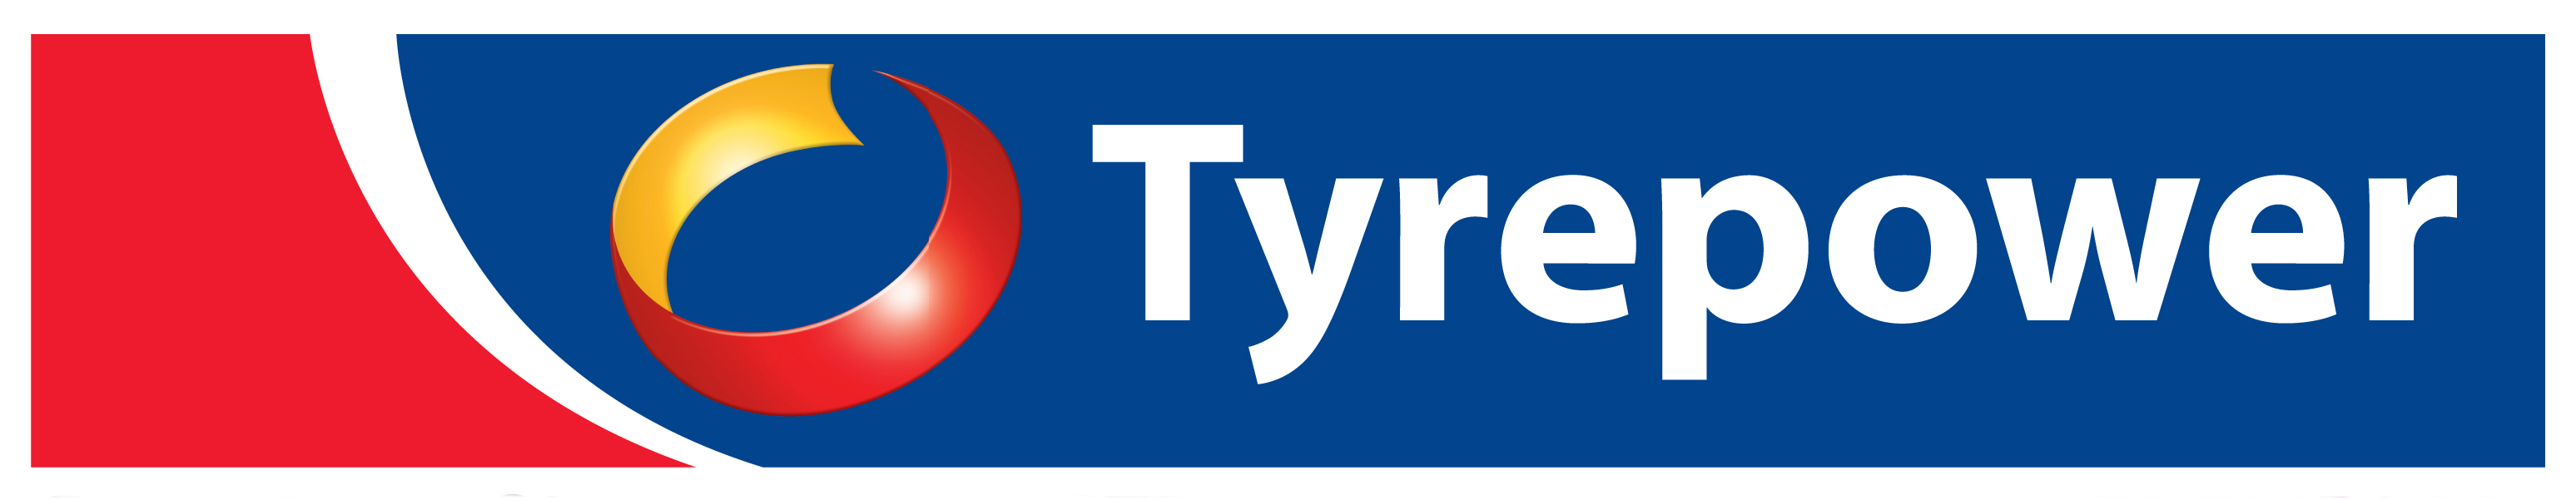 Tyrepower Logo no Tagline White Border